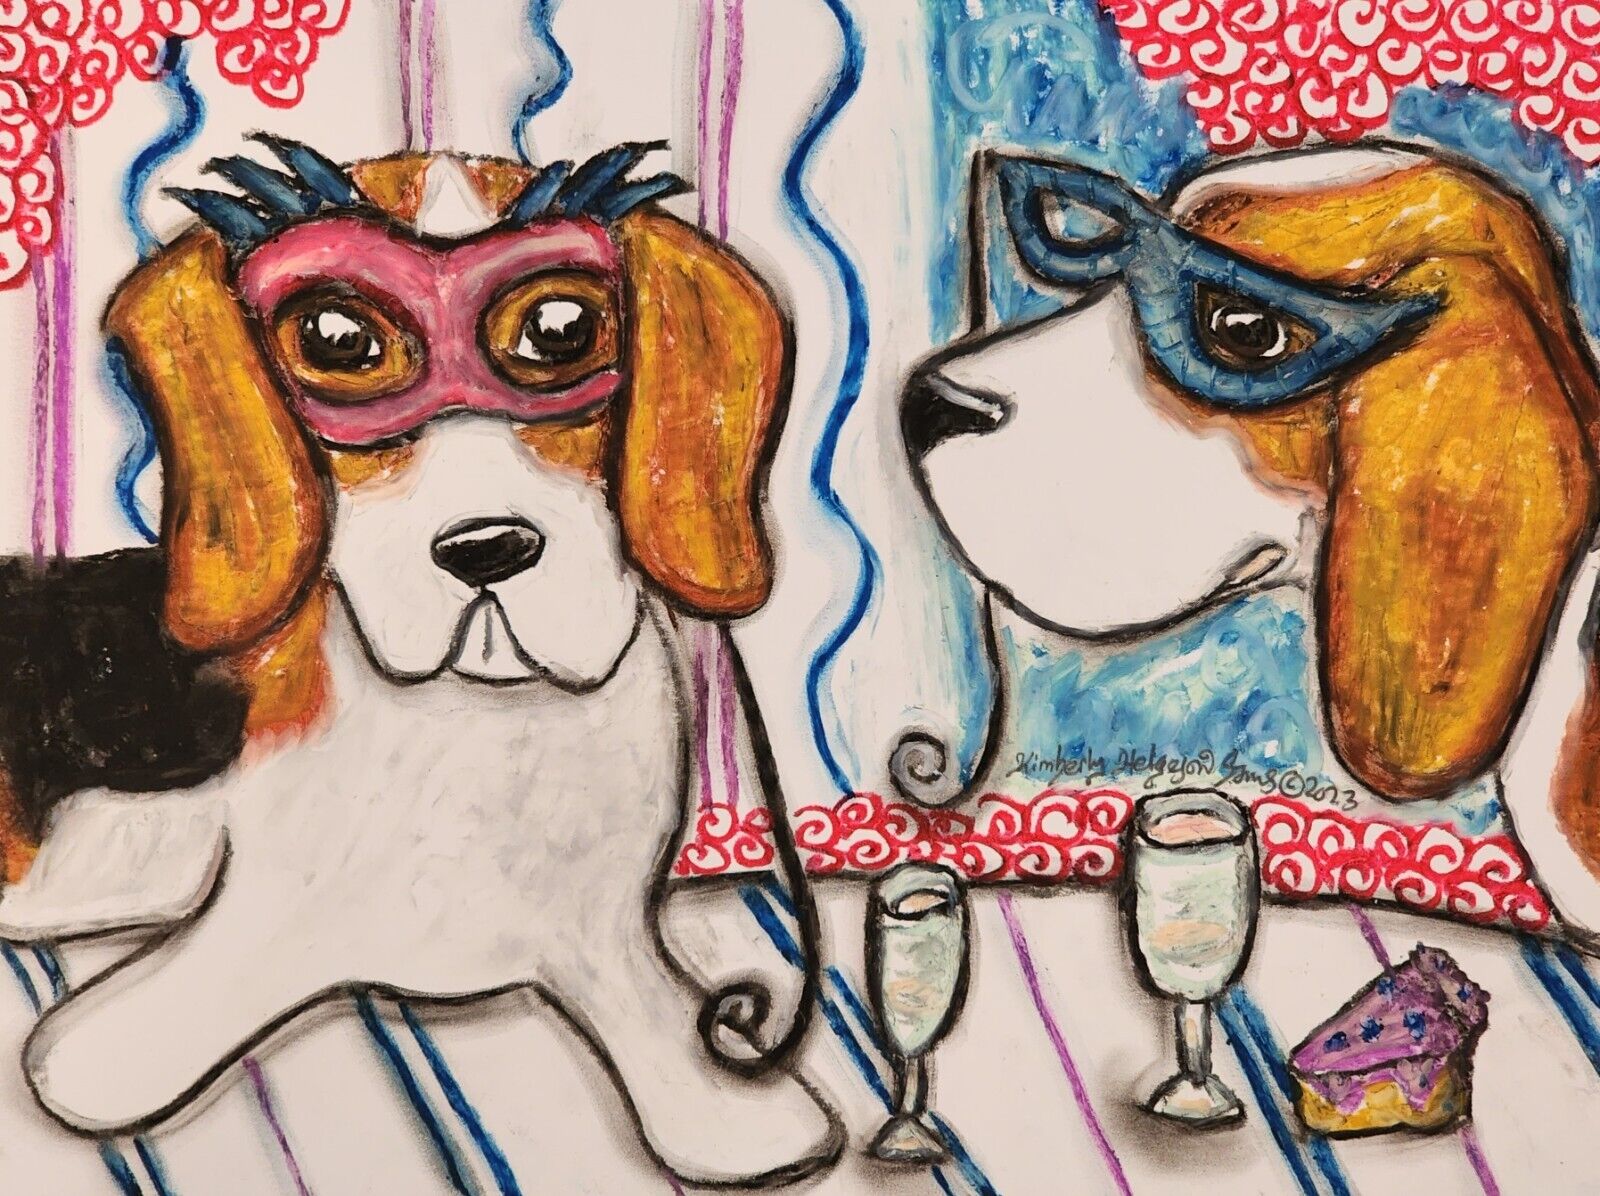 BEAGLE Masquerade Dog Art 8 x 10 Signed Print by Artist Kimberly Helgeson Sams